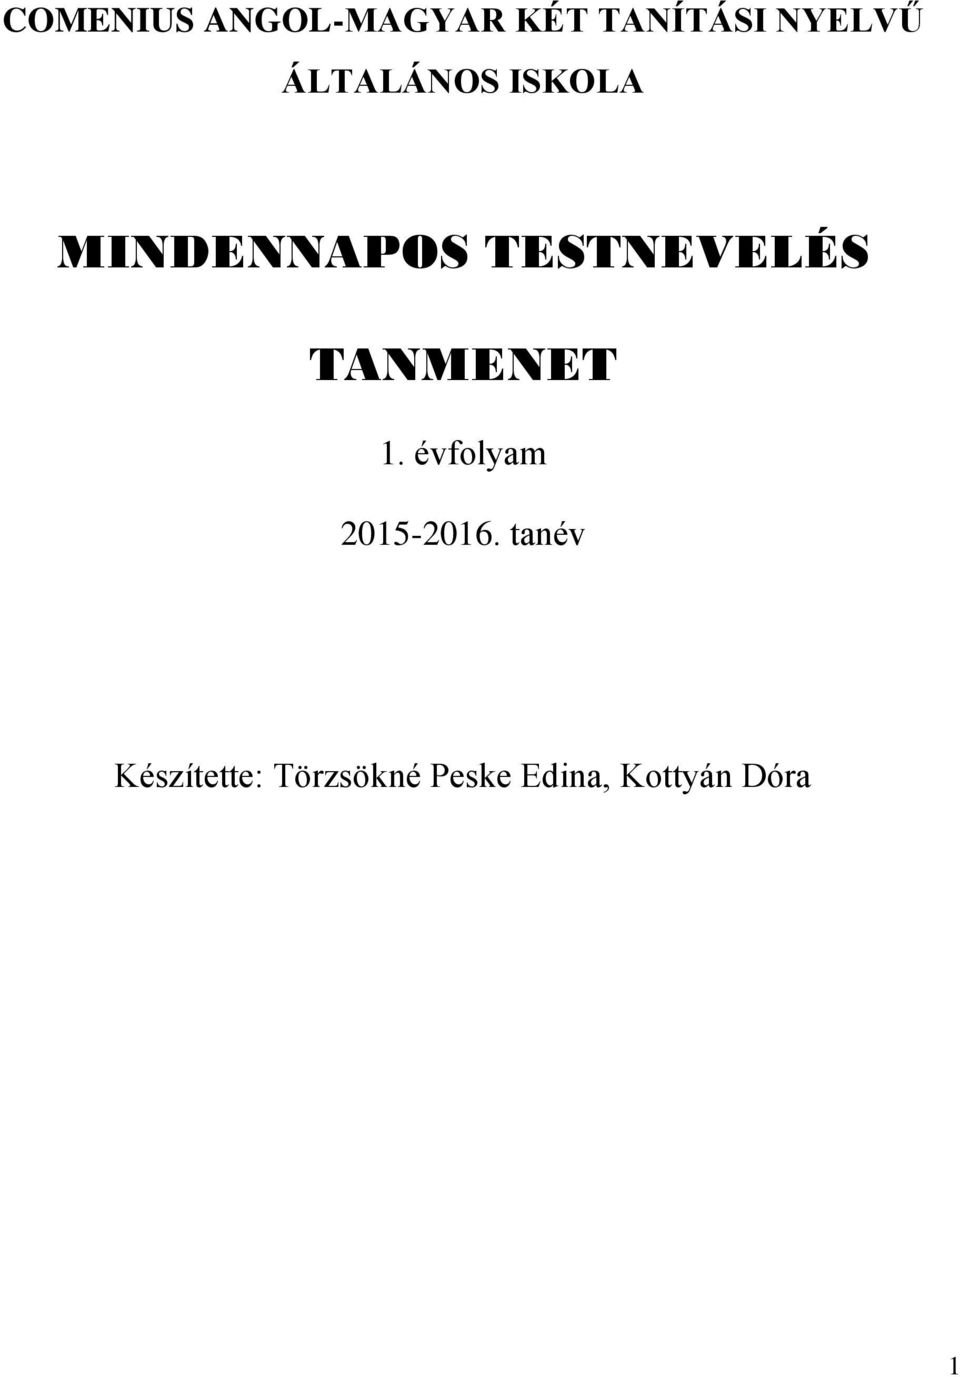 TANMENET 1. évfolyam 2015-2016.